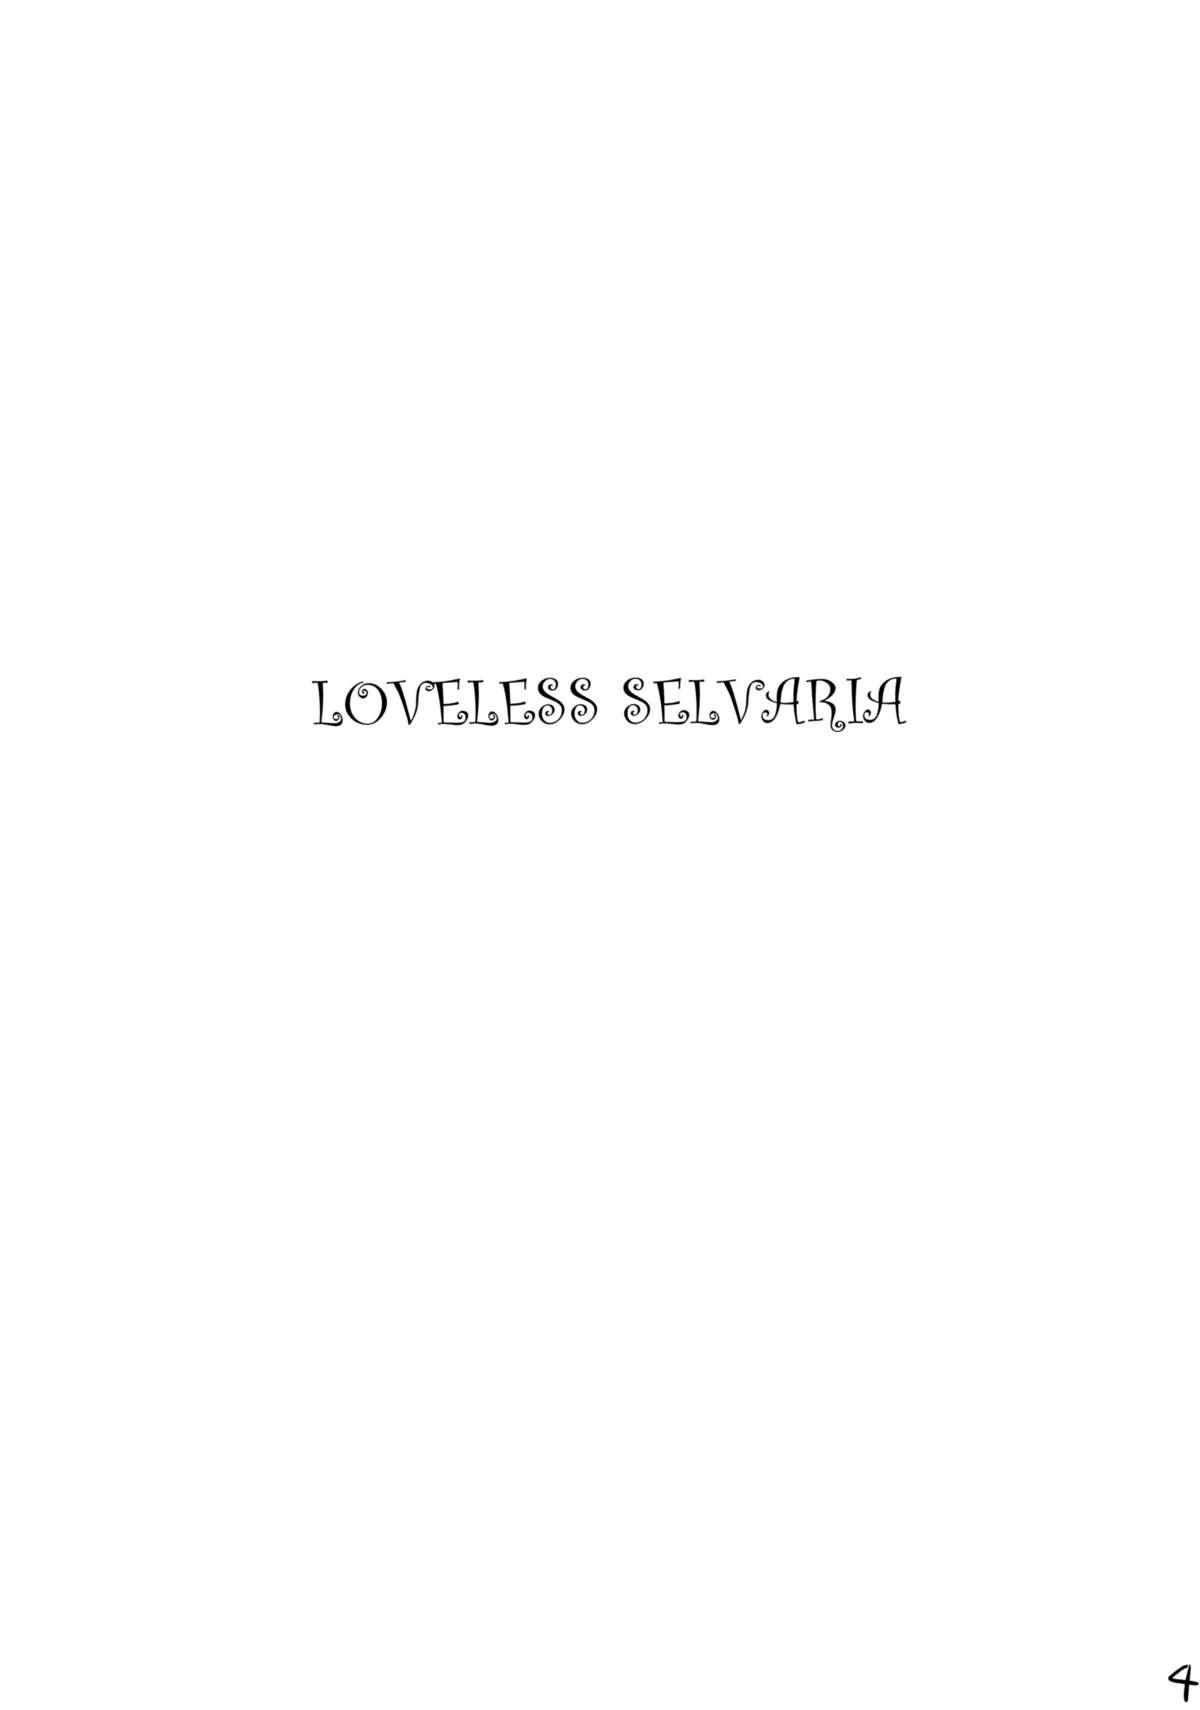 Femboy Loveless Selvaria - Valkyria chronicles Rimjob - Page 3